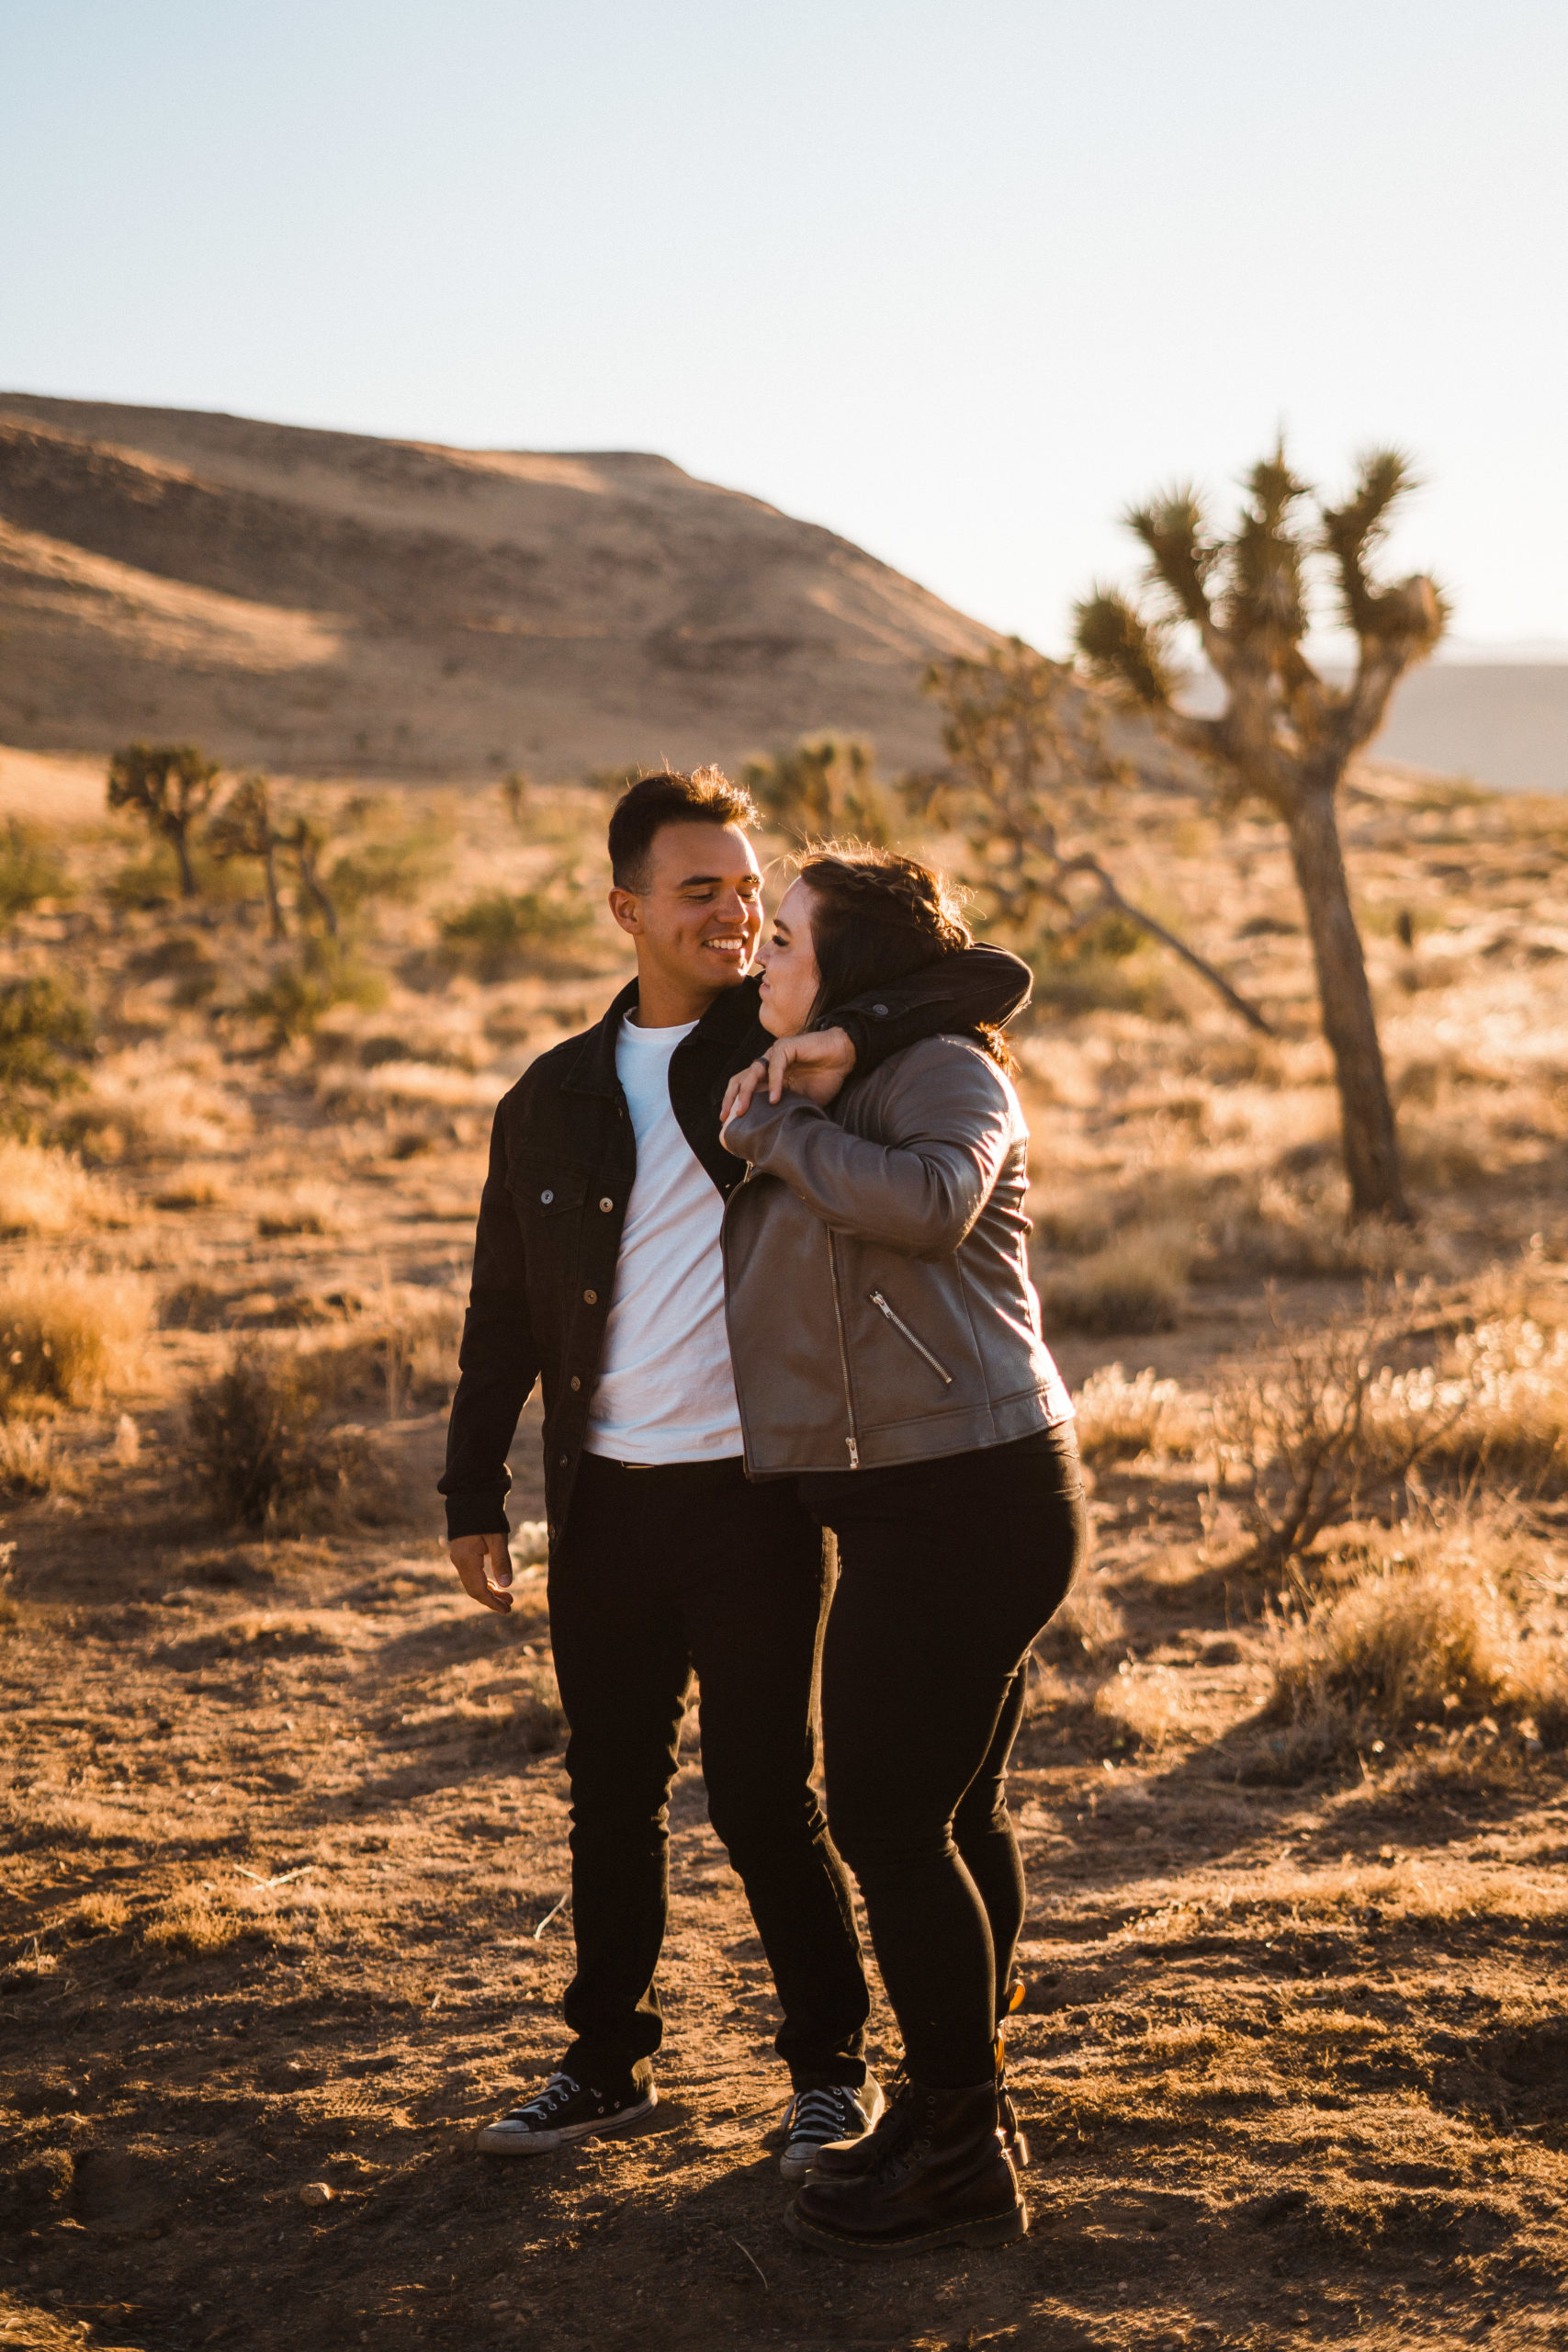 Edgy Engagement Photoshoot in California desert